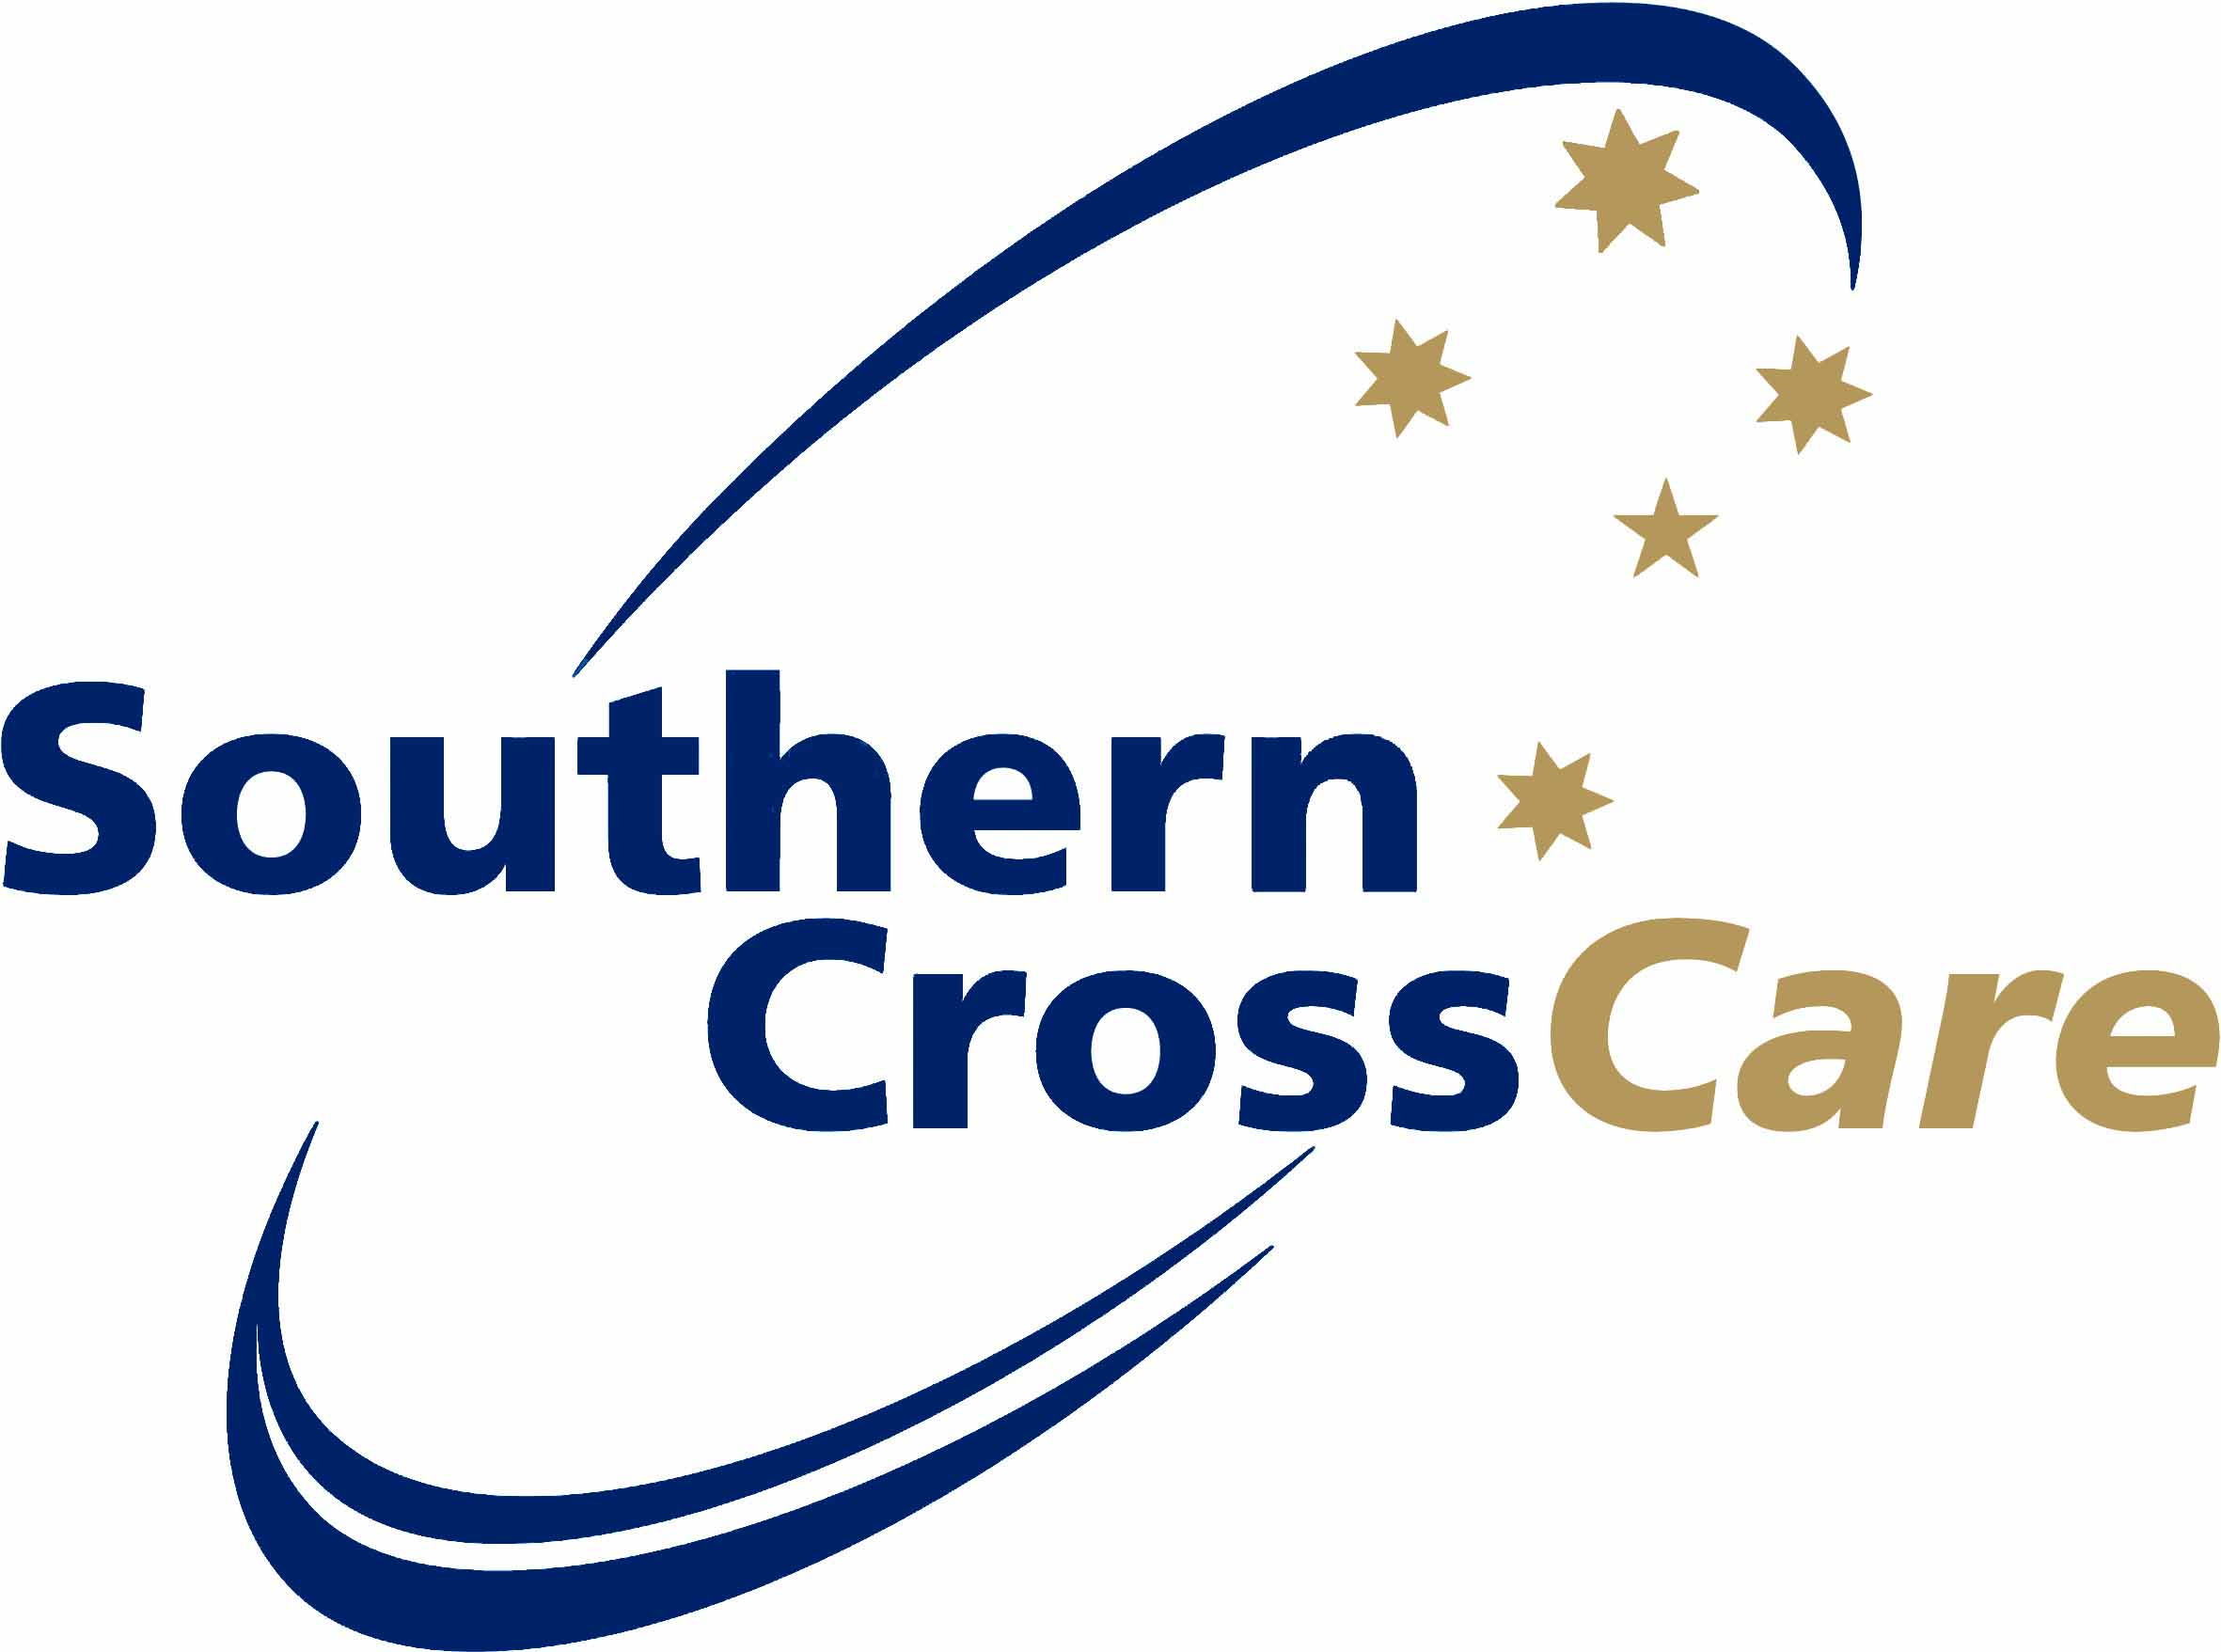 Southern cross care.jpg